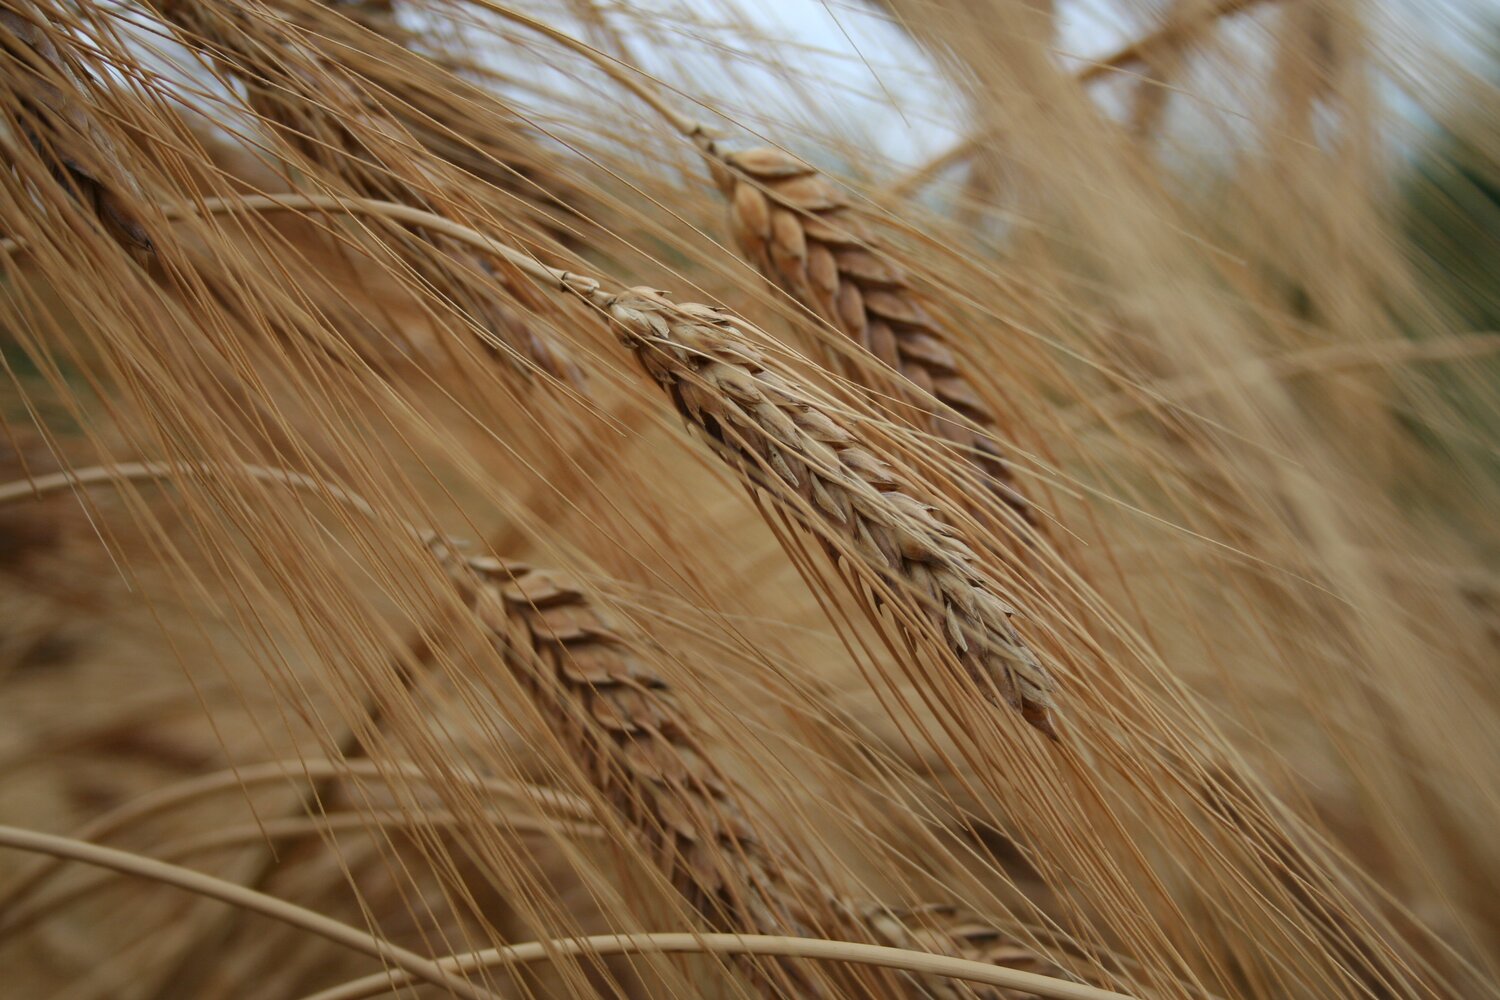 Wheat stalks.